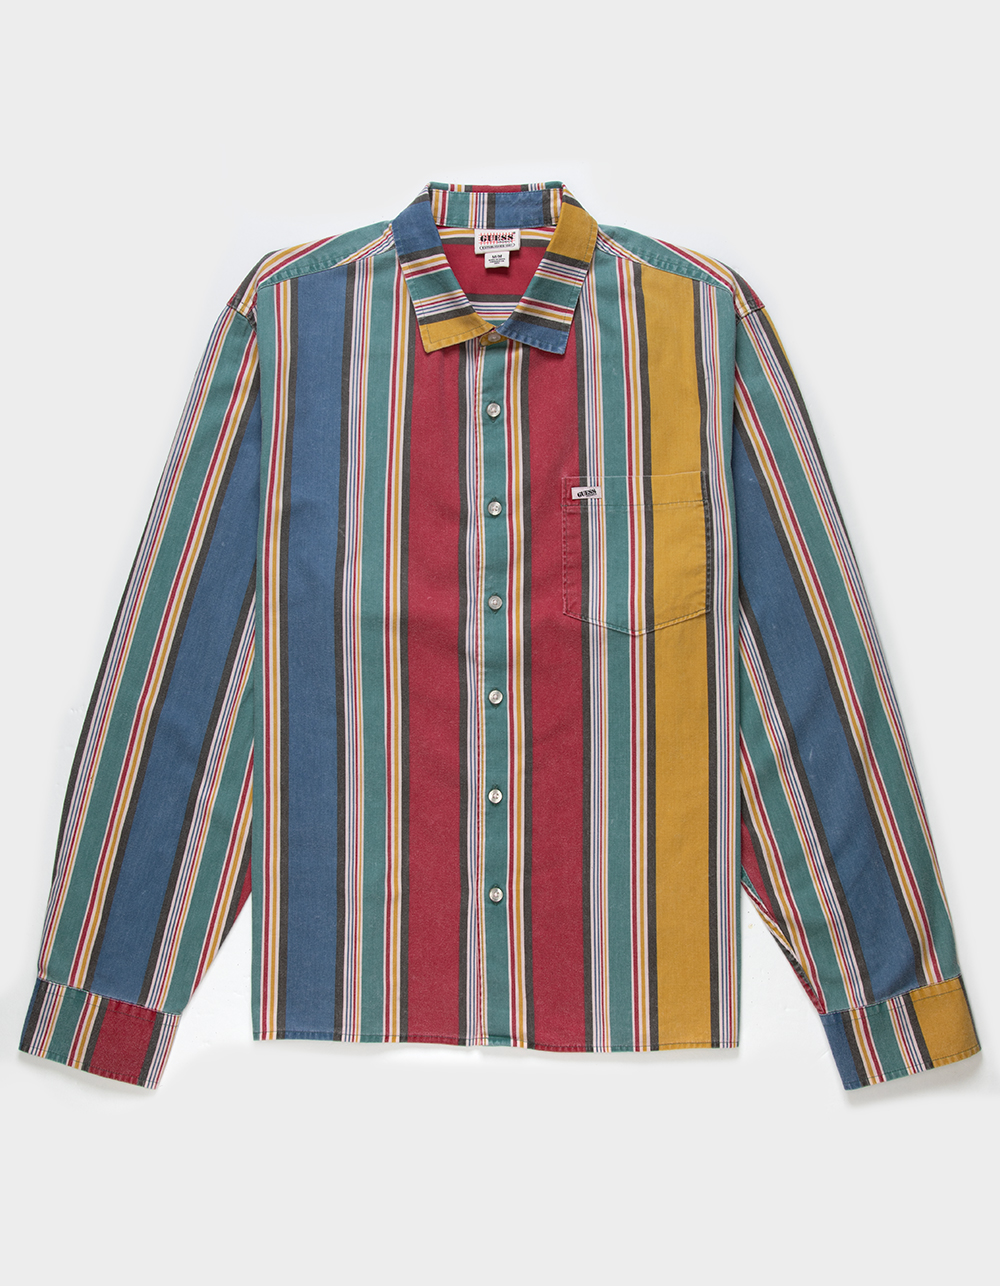 GUESS ORIGINALS Multi Stripe Mens Button Up Shirt